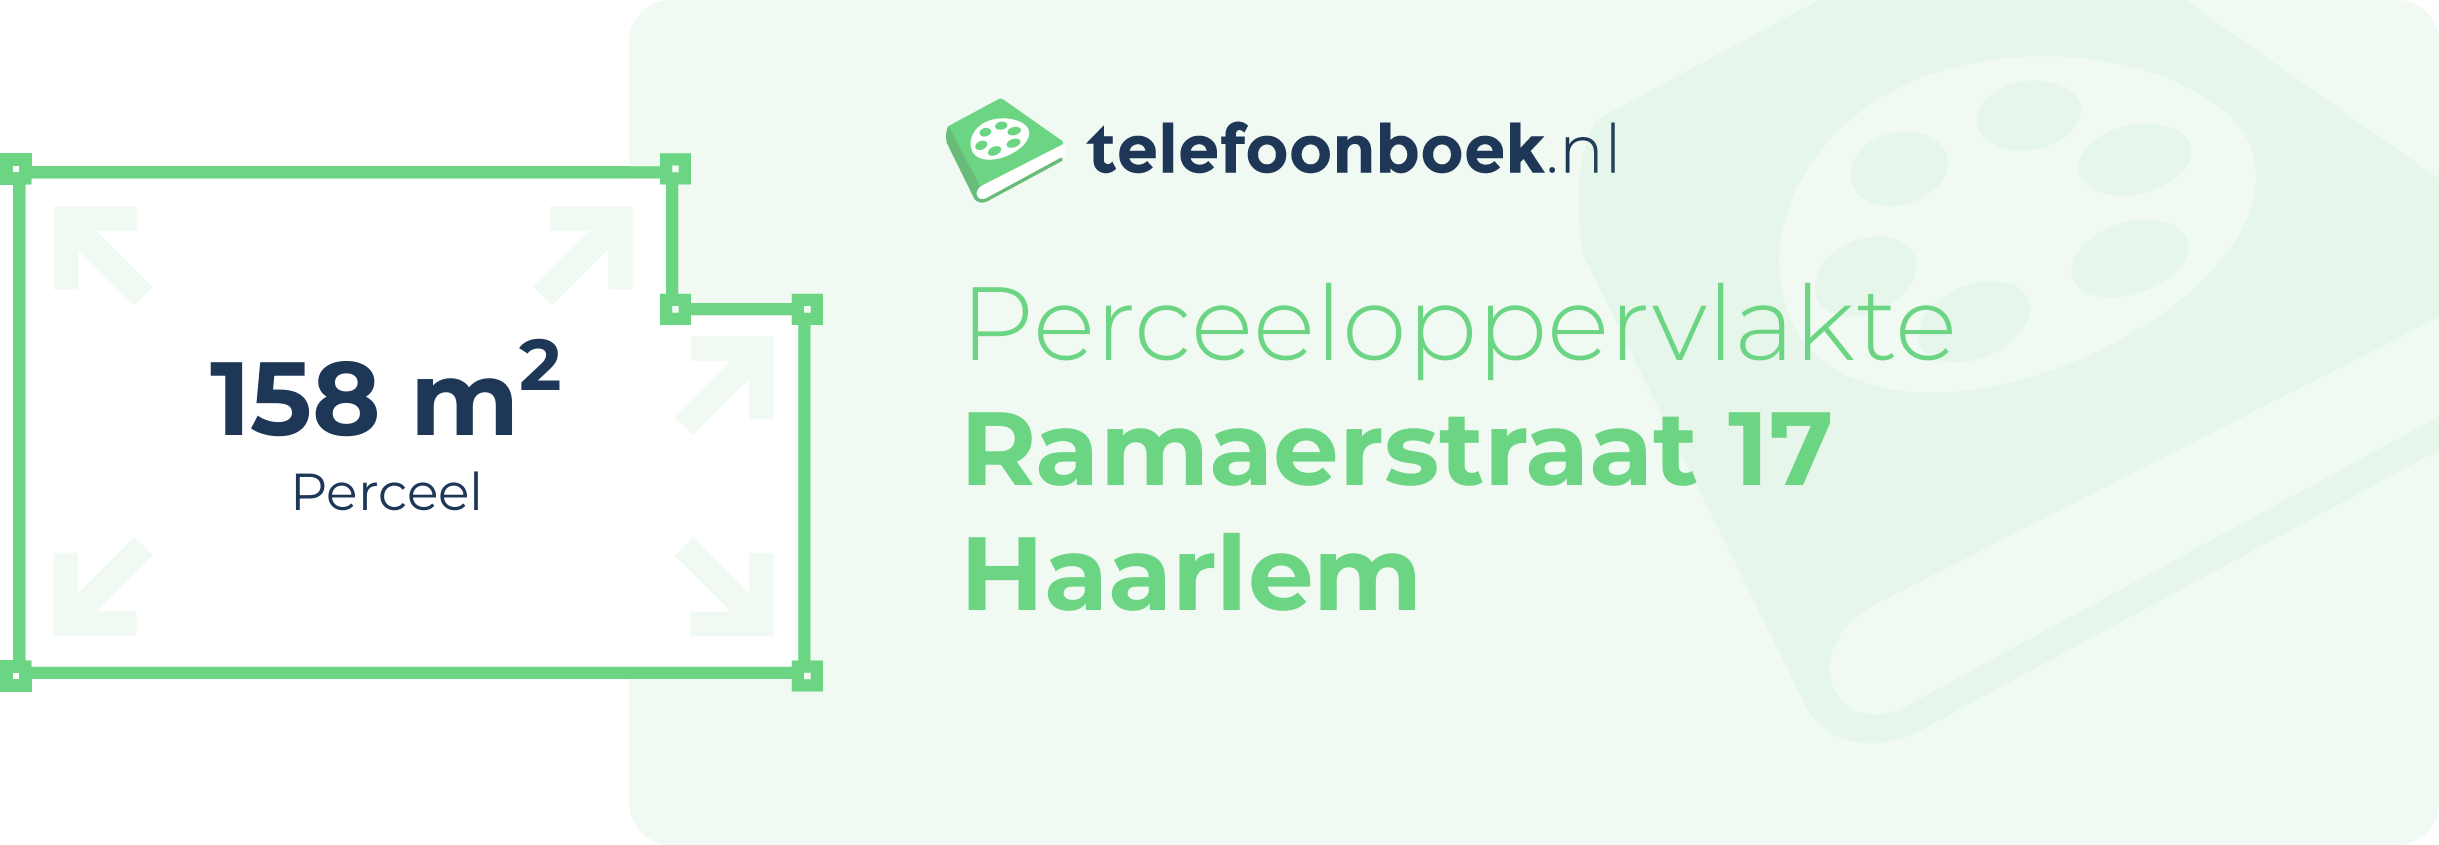 Perceeloppervlakte Ramaerstraat 17 Haarlem